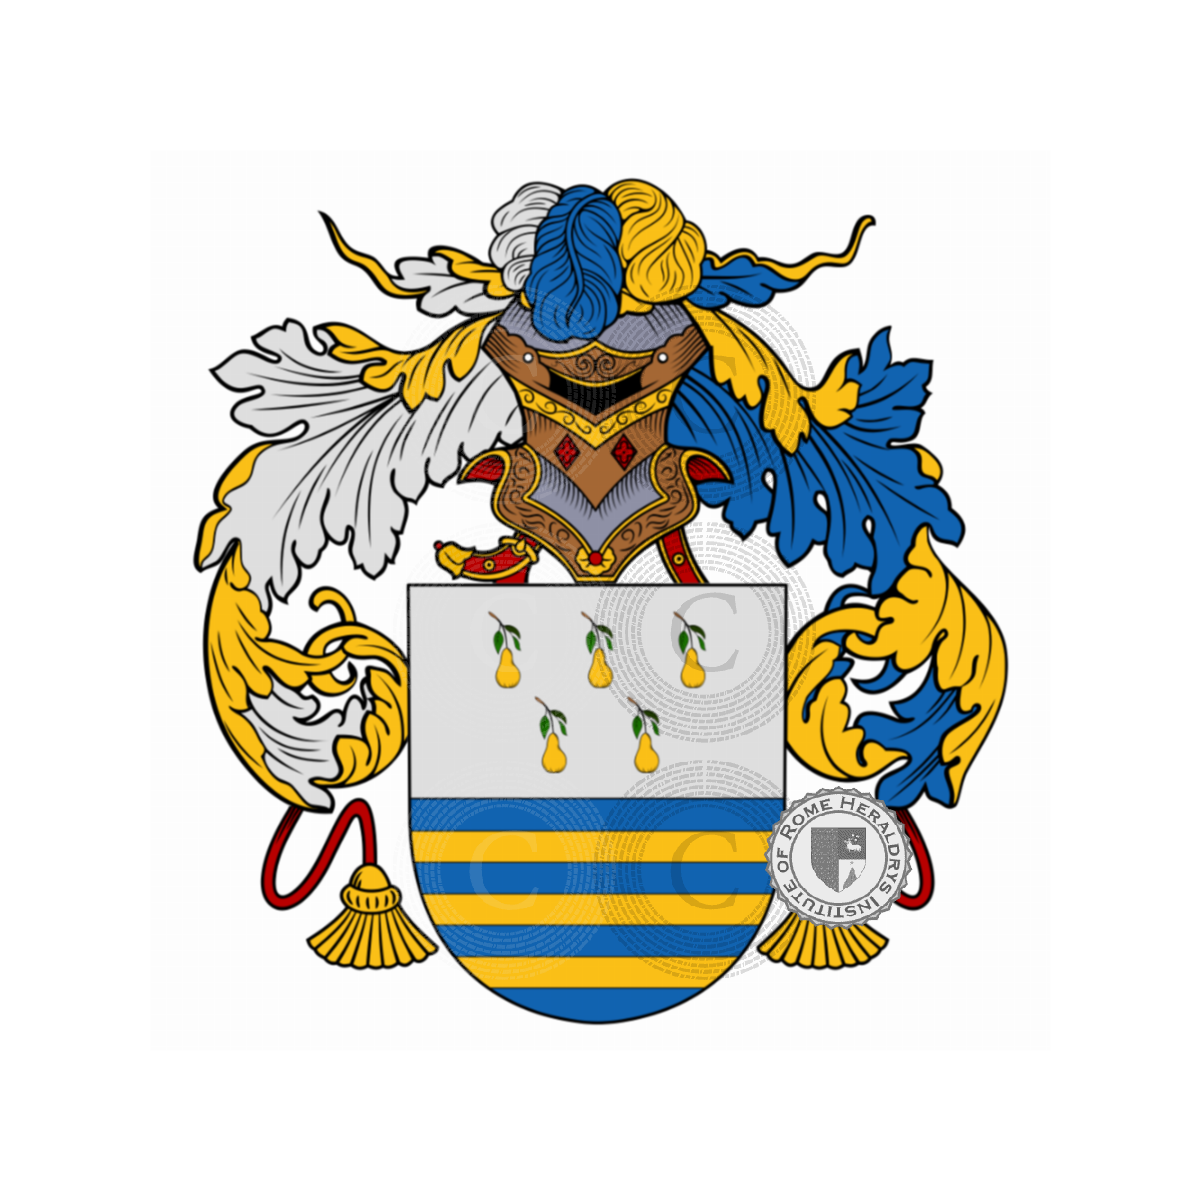 Wappen der FamilieLucas